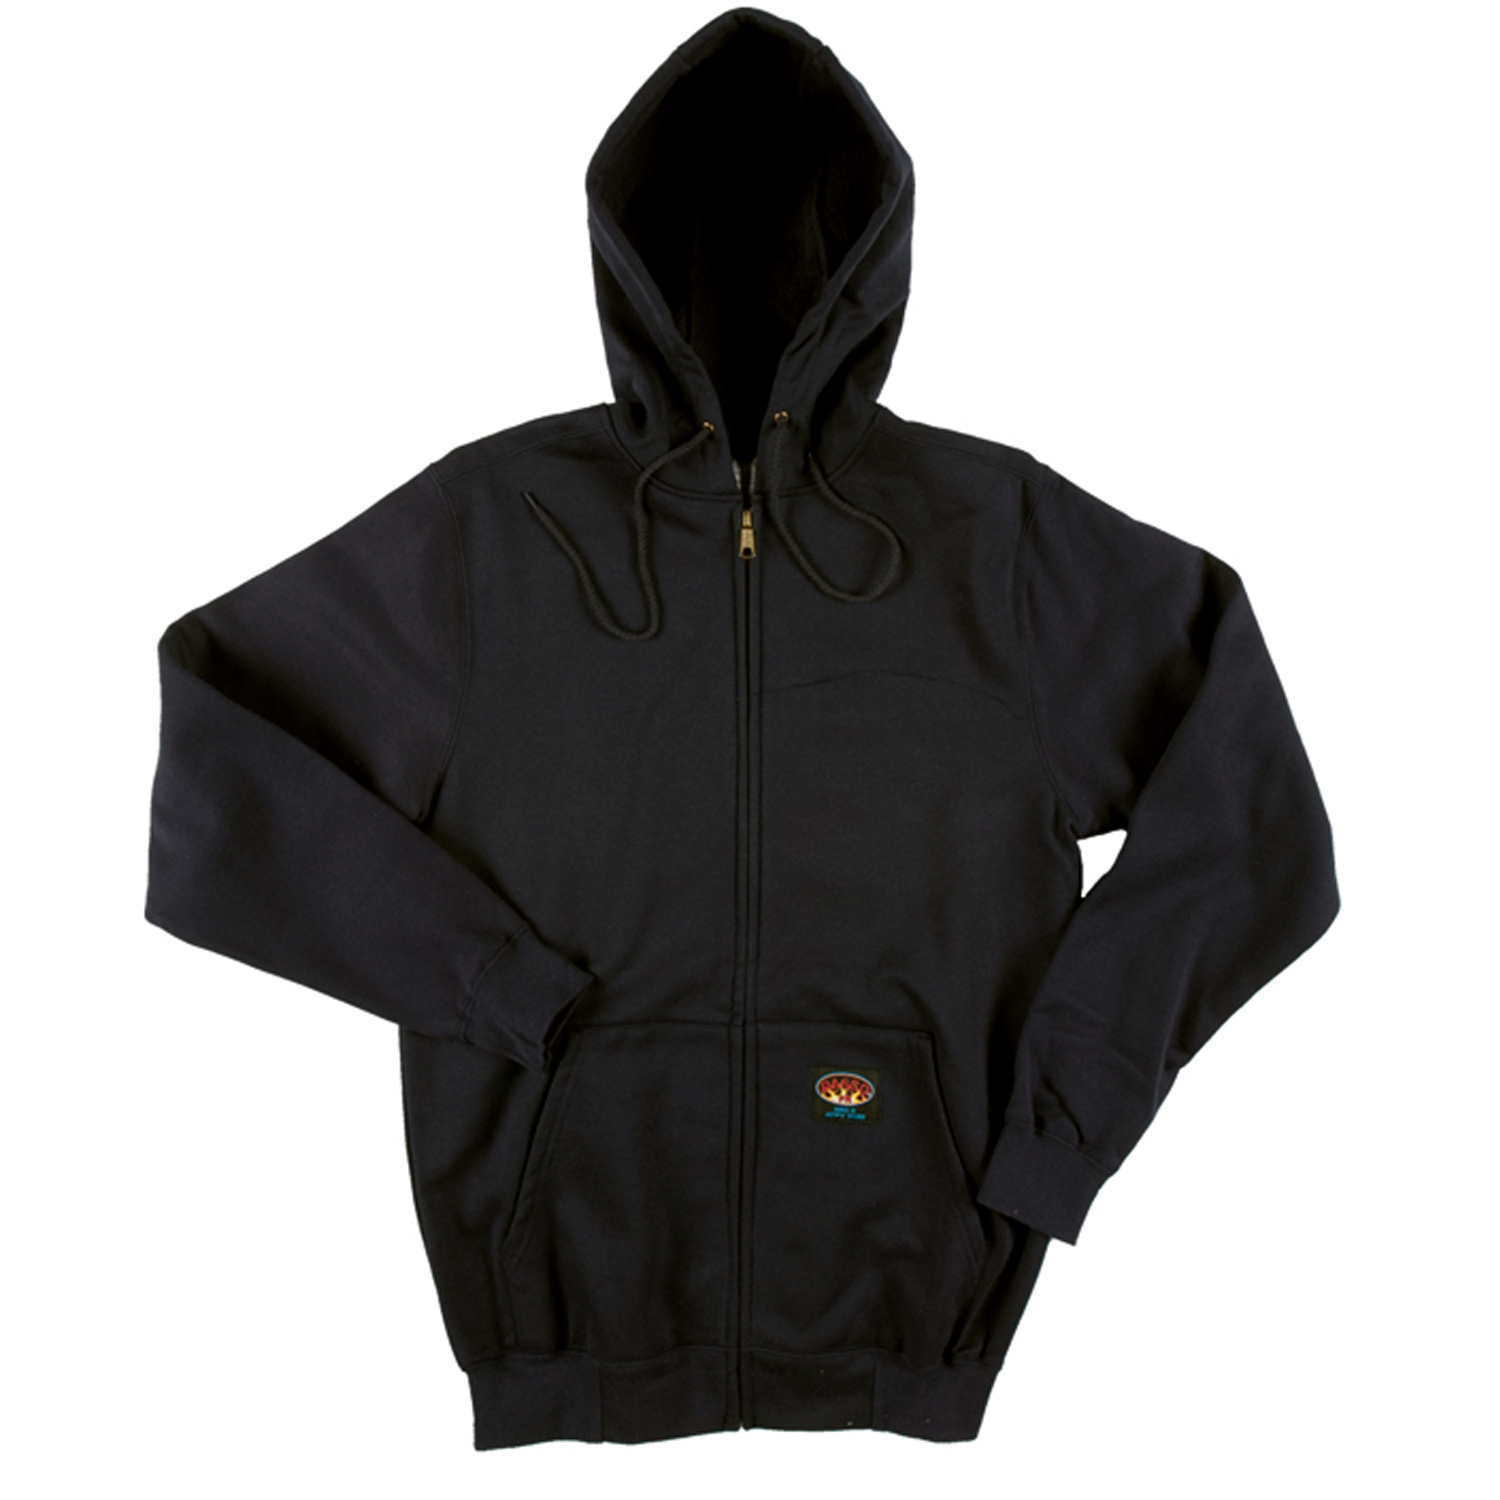 Rasco Flame Resistant 10 oz Black Hooded Sweatshirt